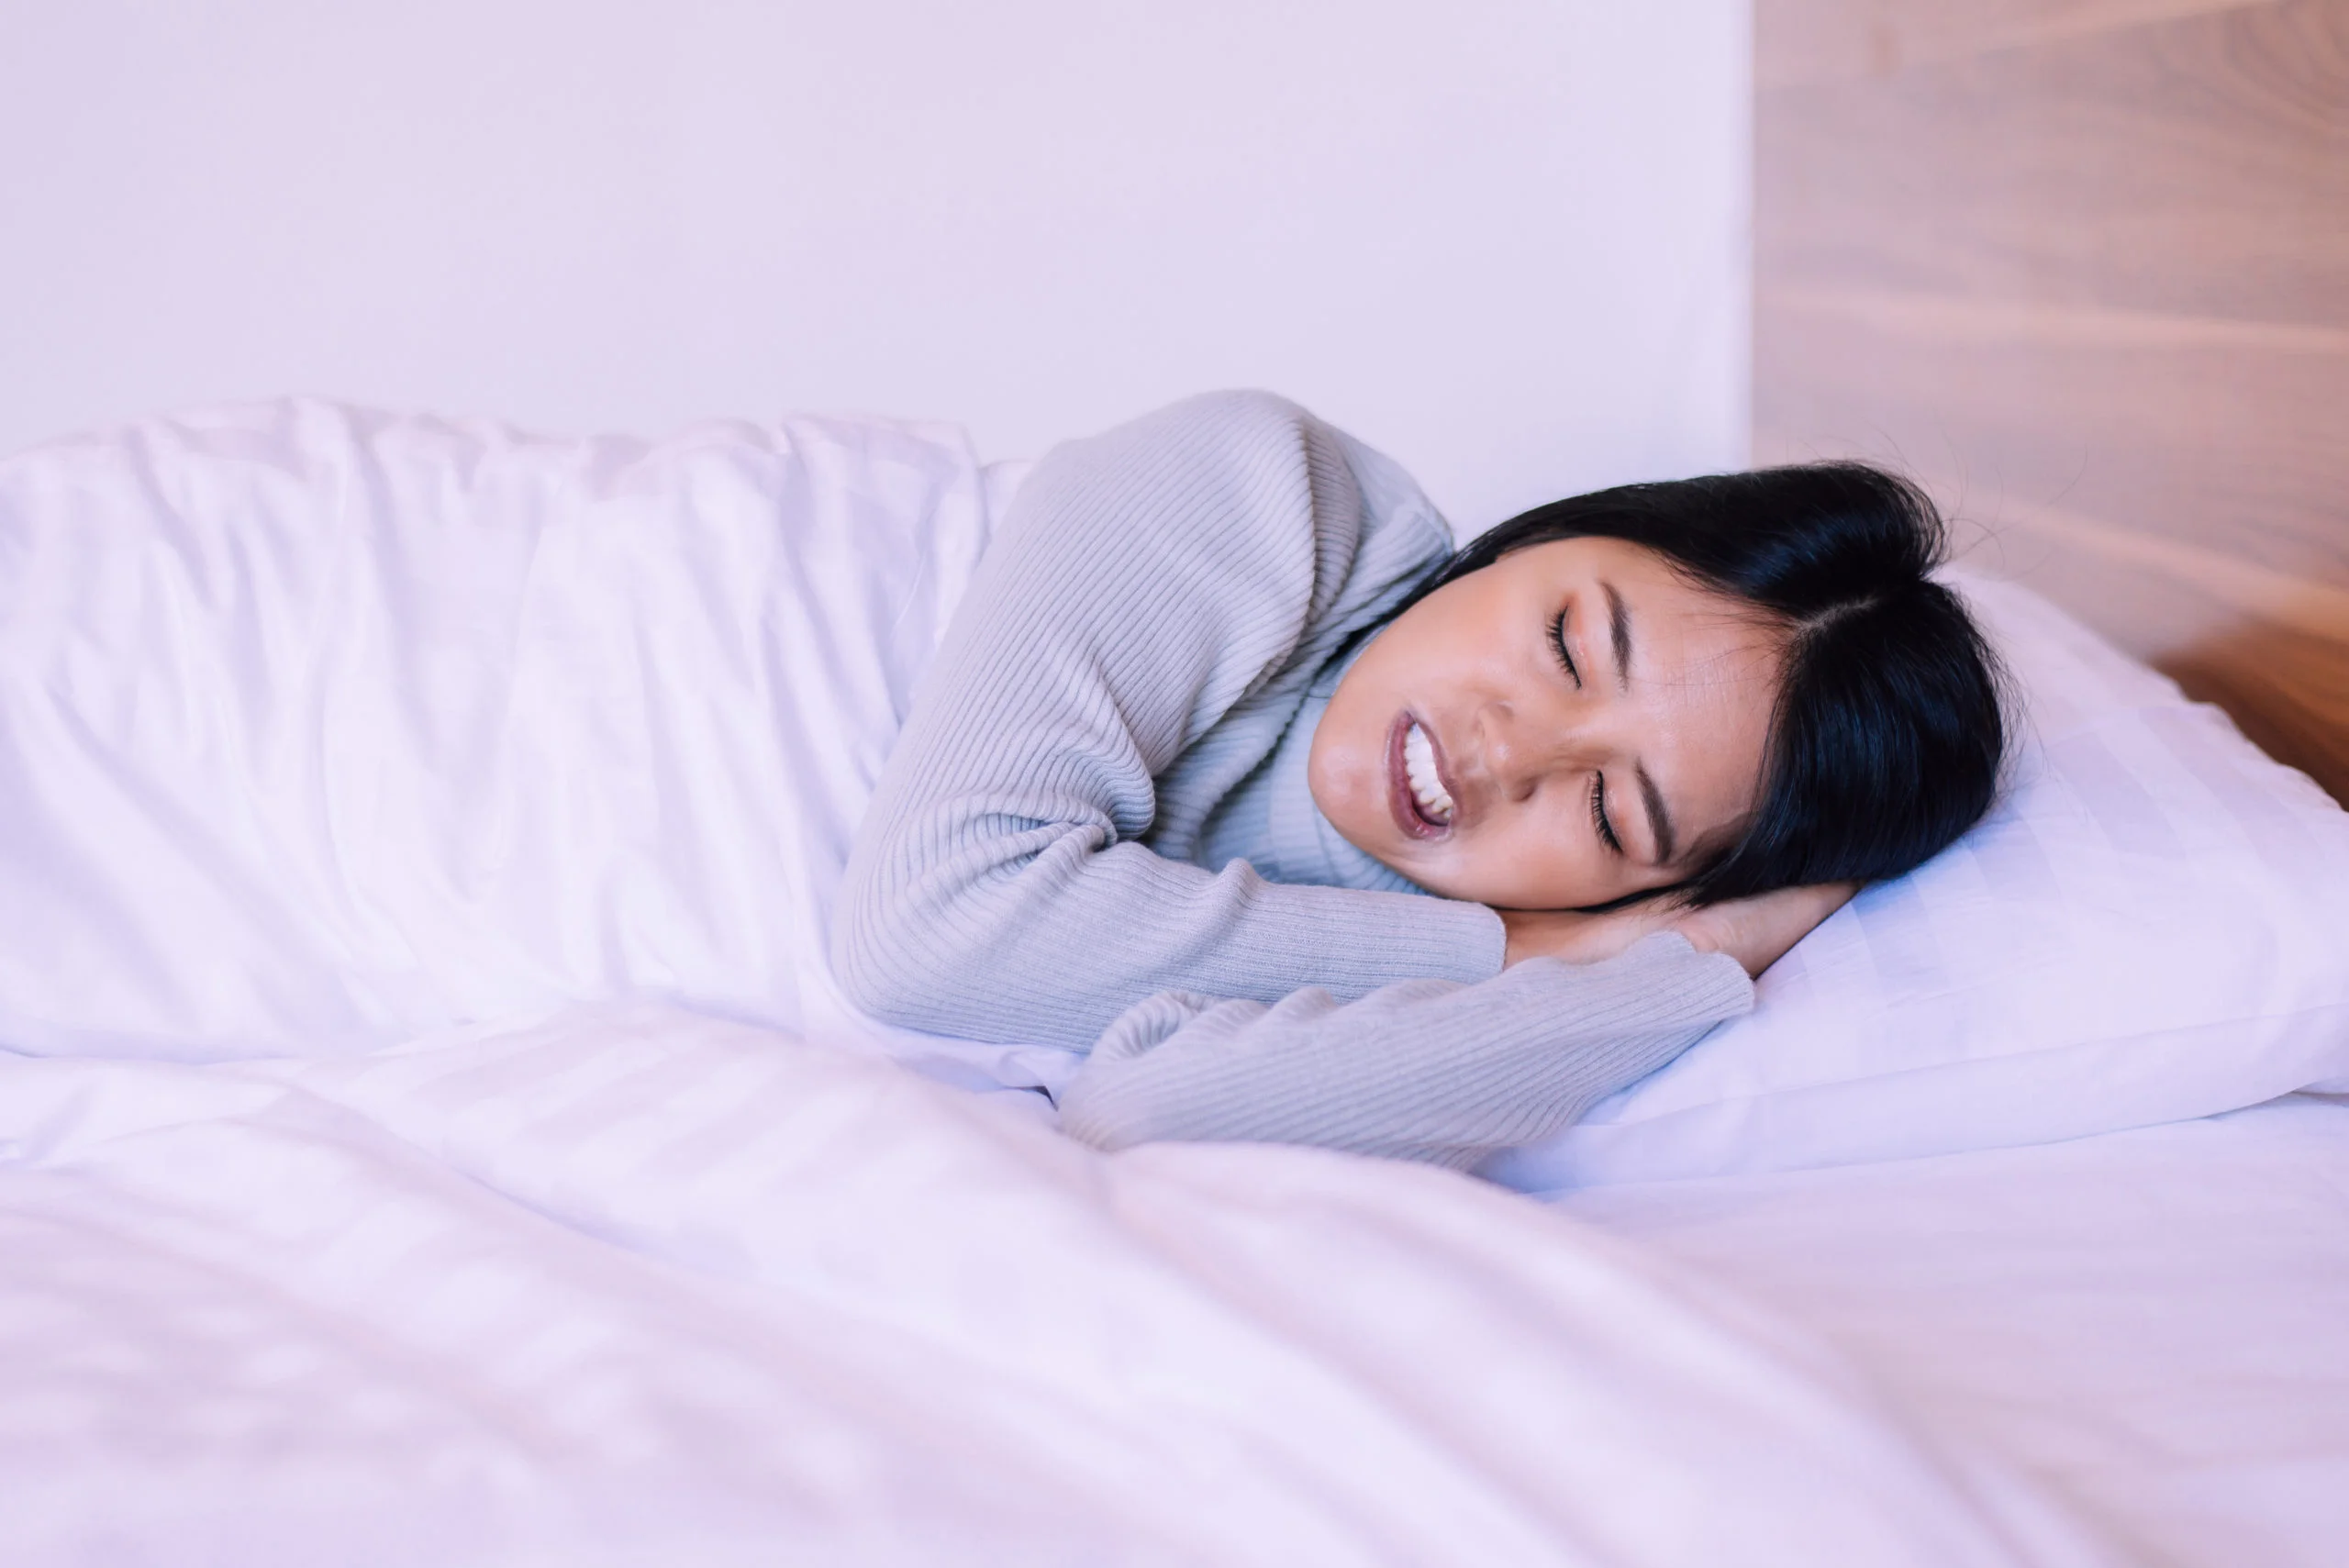 Woman grinding and clenching teeth in sleep